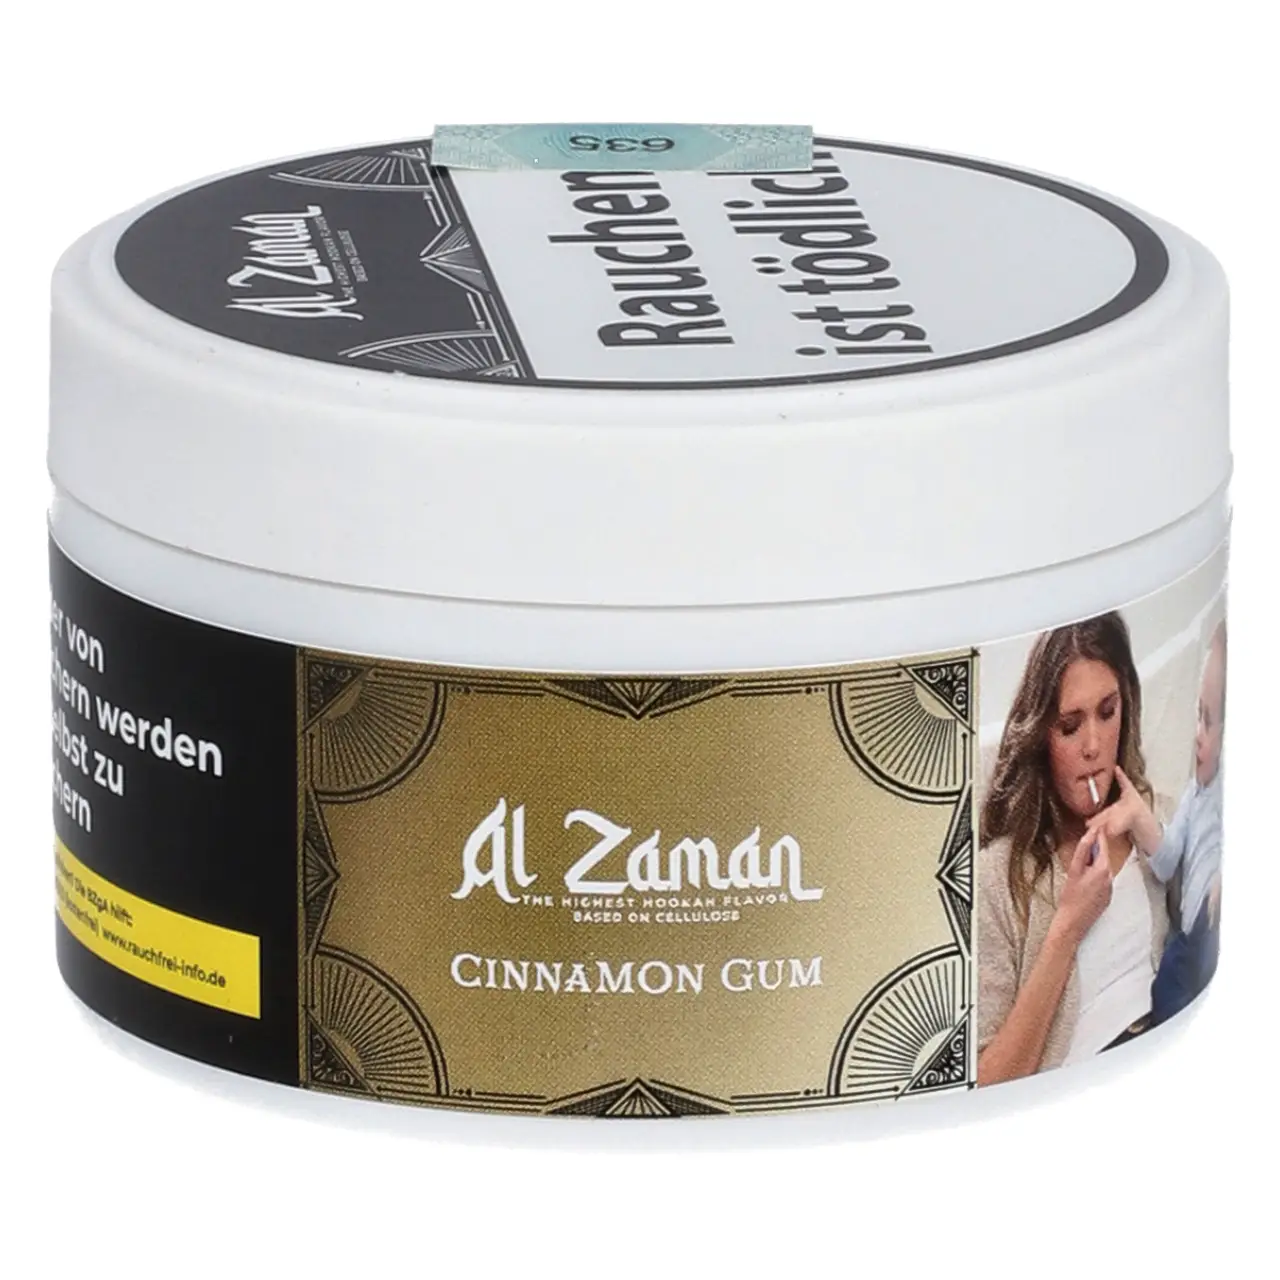 Al Zaman nikotinfreier Shisha Tabak Cinnamon Gum - Kaugummi Zimt - 25g